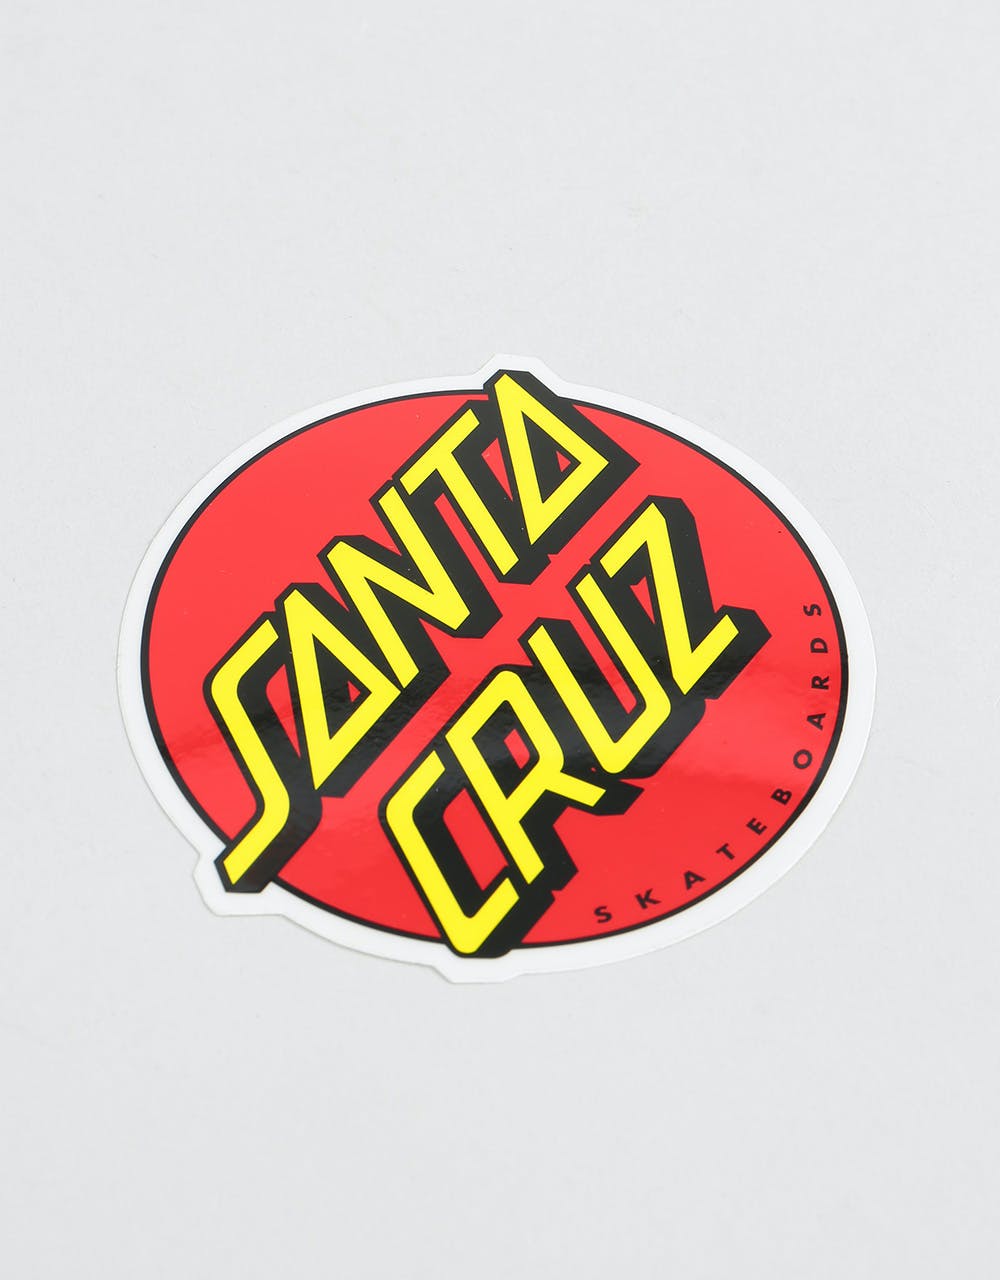 Santa Cruz Classic Dot Sticker